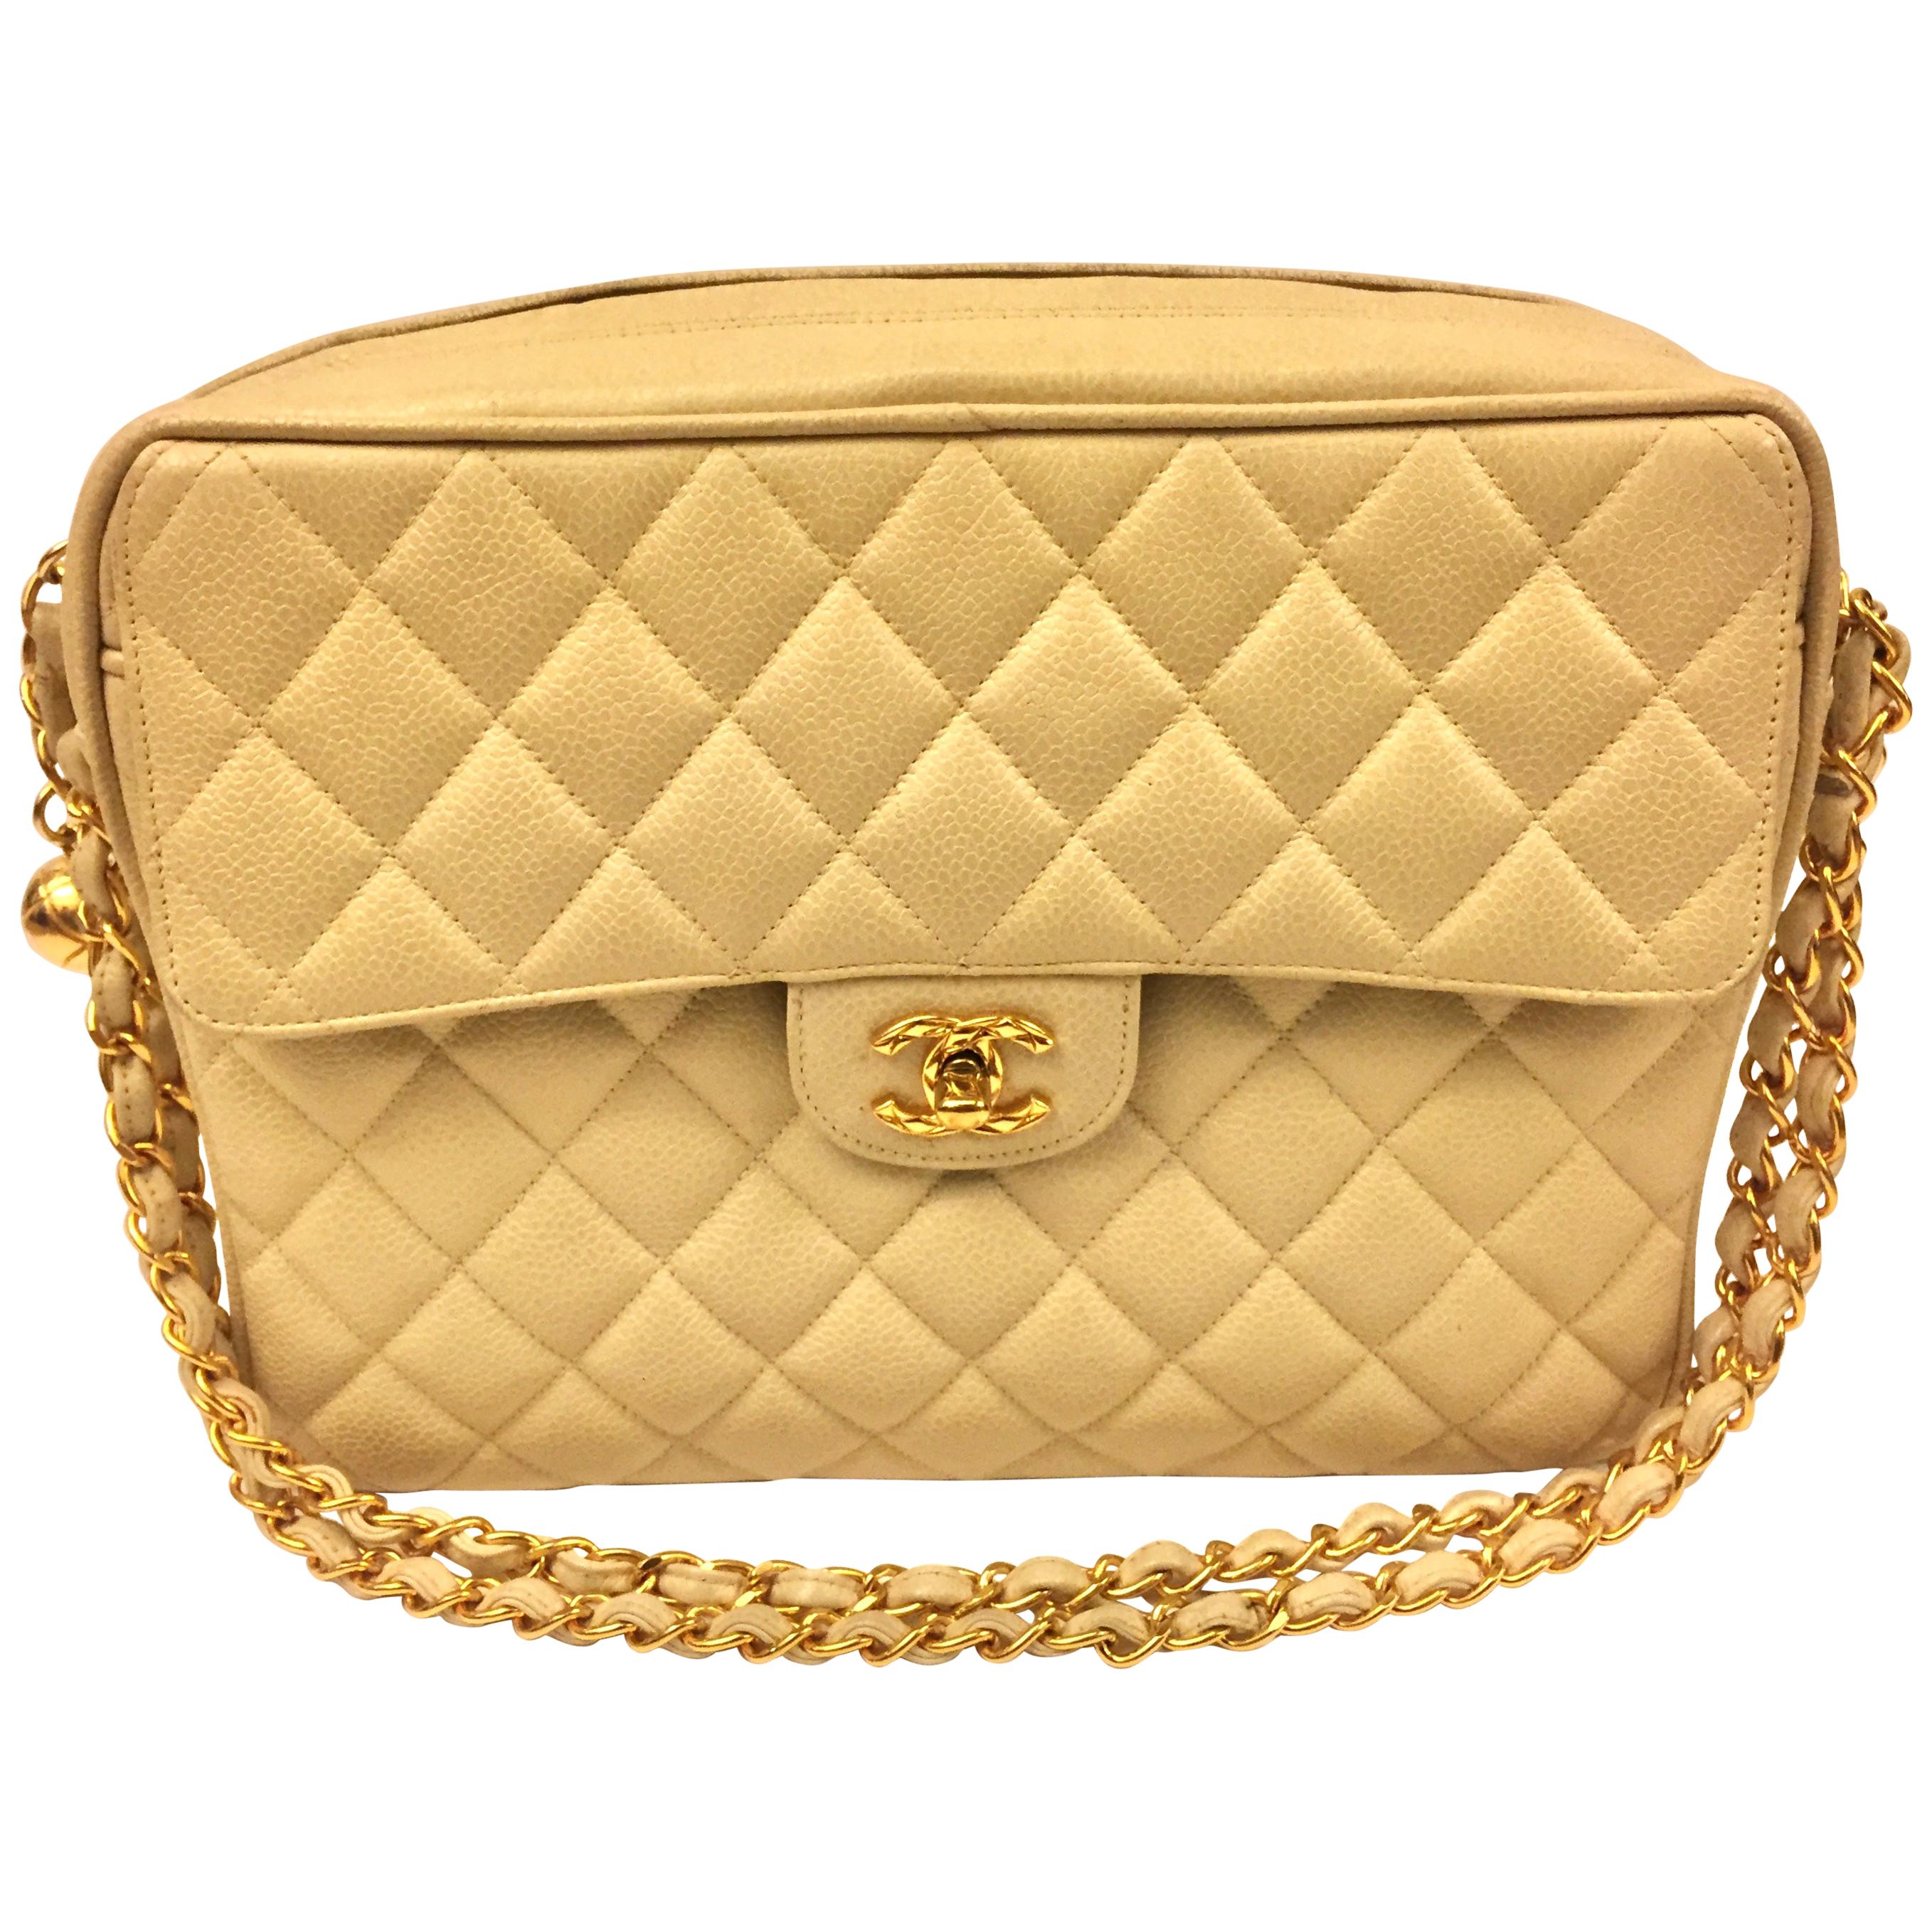 Chanel Beige Caviar Double Chain Handbag